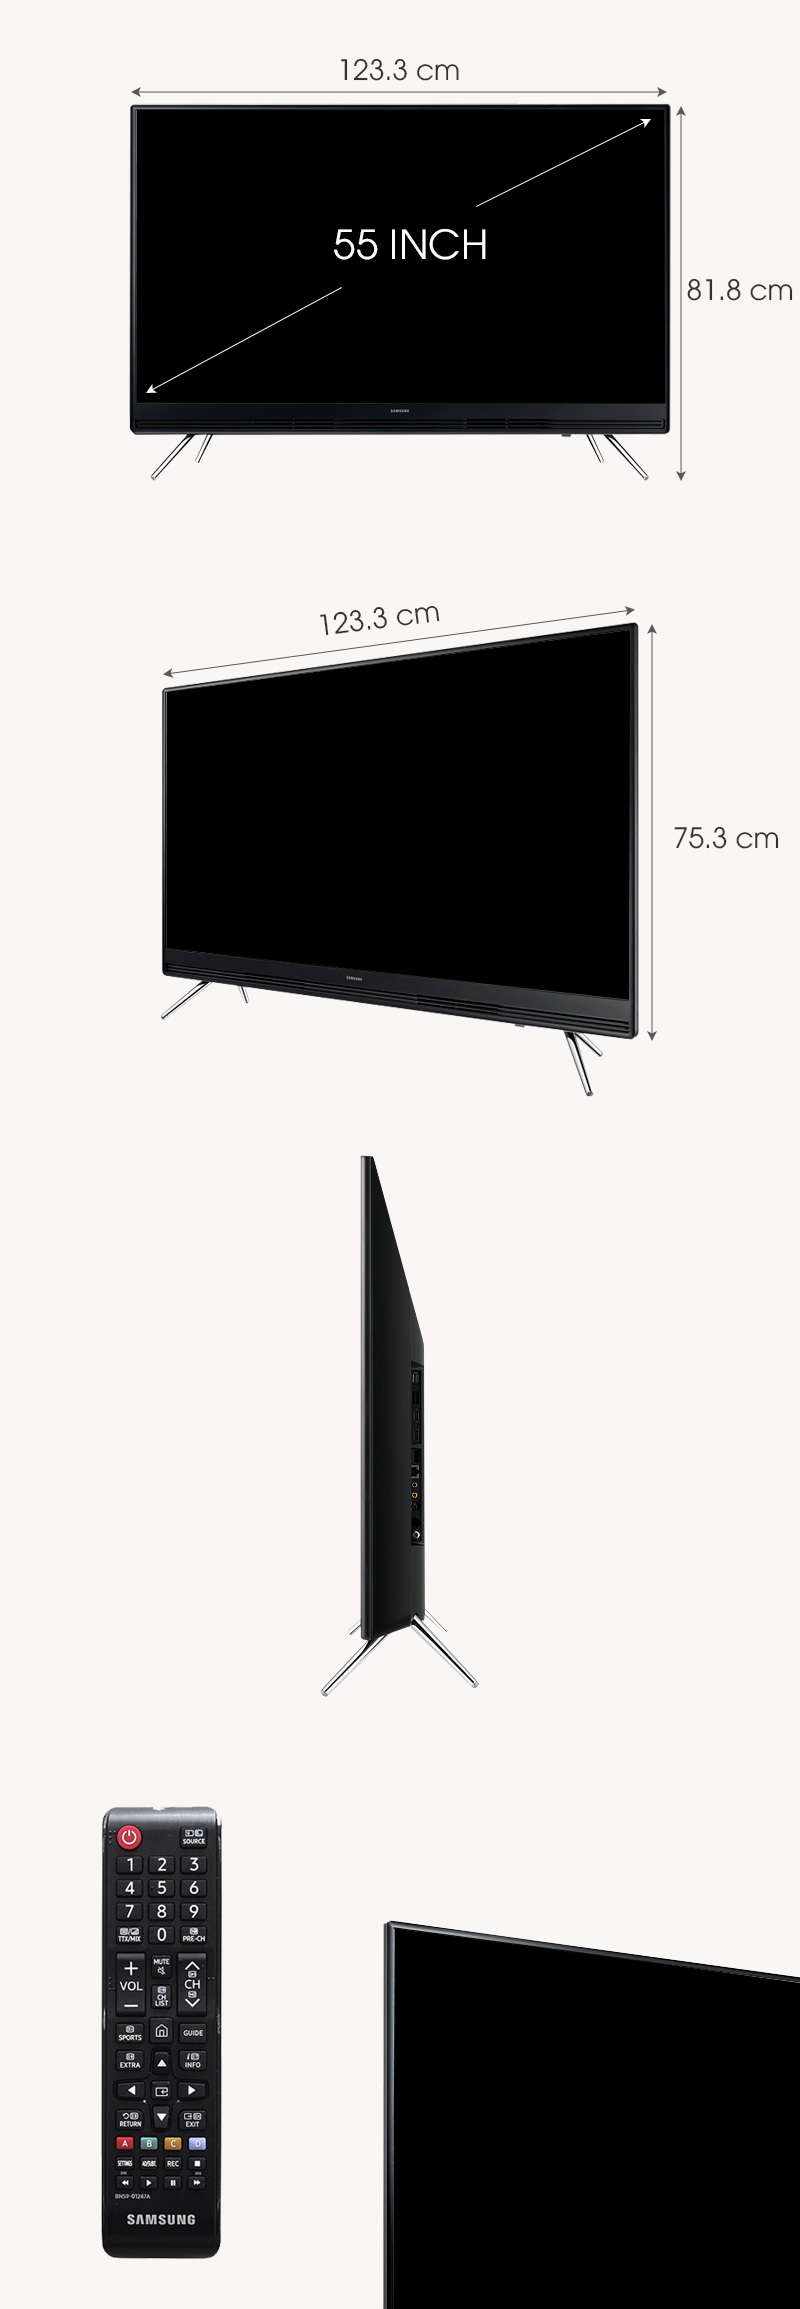 Smart Tivi Samsung 55 inch UA55K5300 - Kích thước tivi